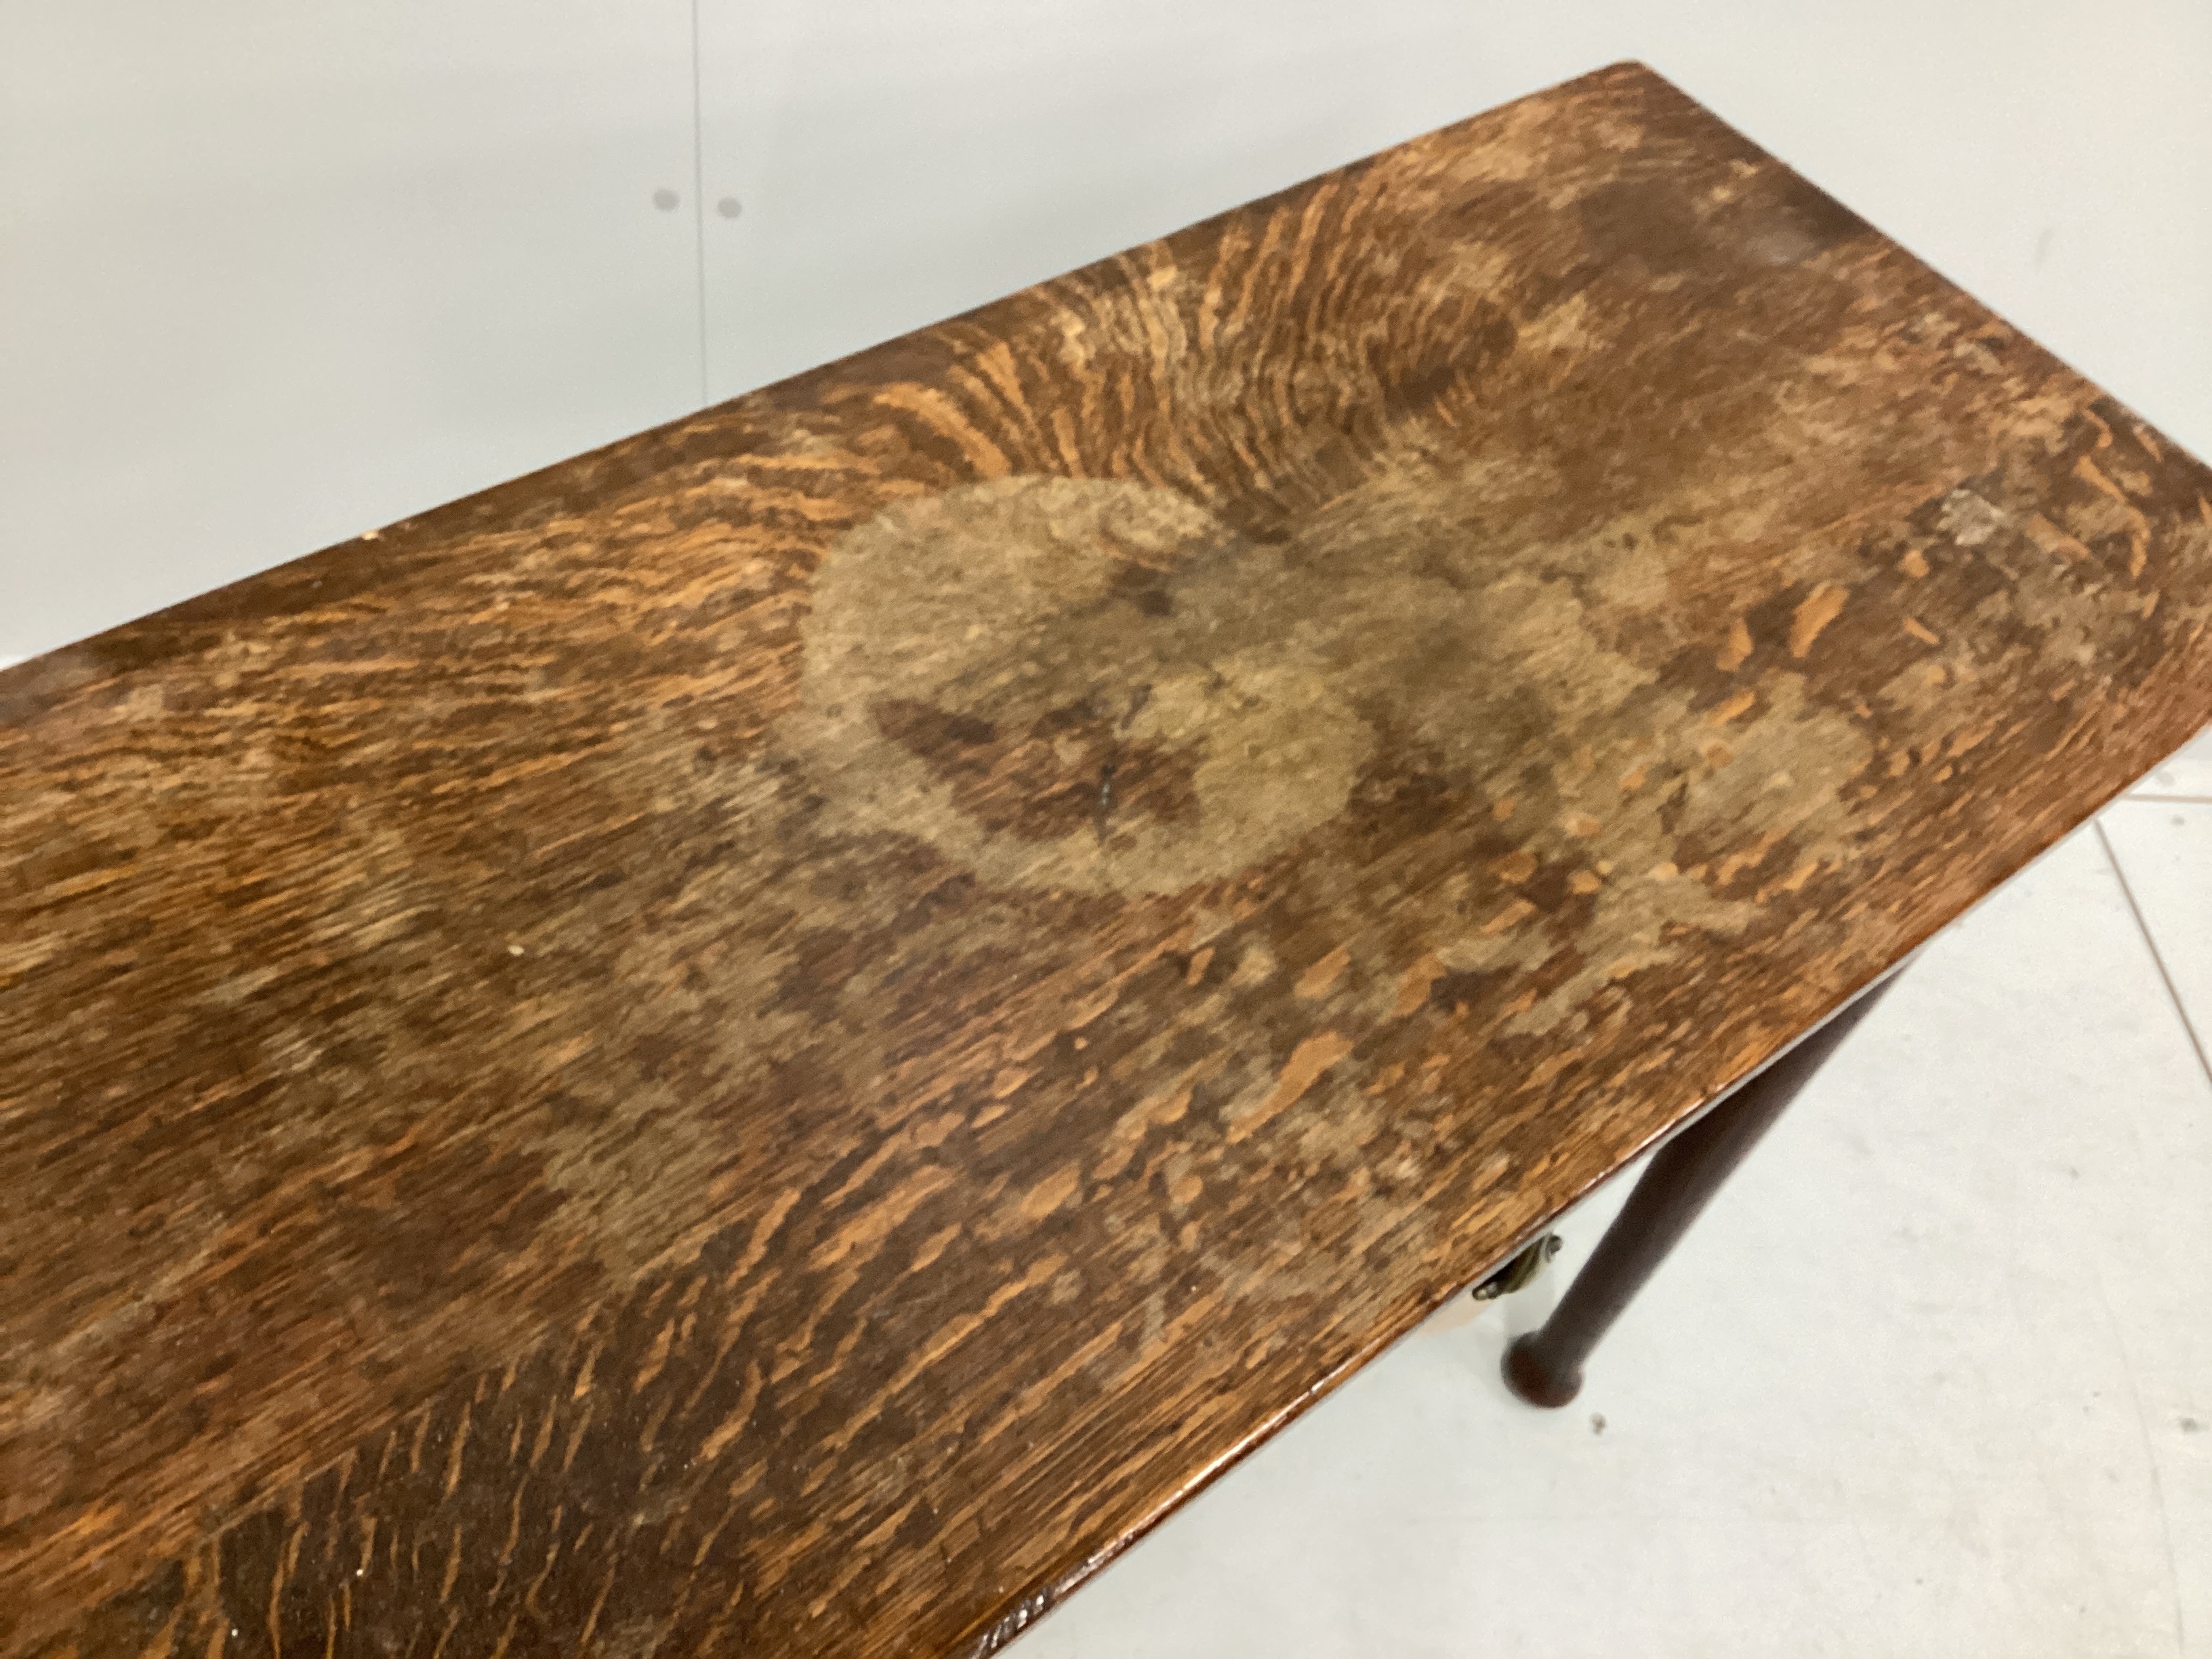 An oak rectangular side table, bears George V Royal cypher, width 99cm, depth 45cm, height 74cm